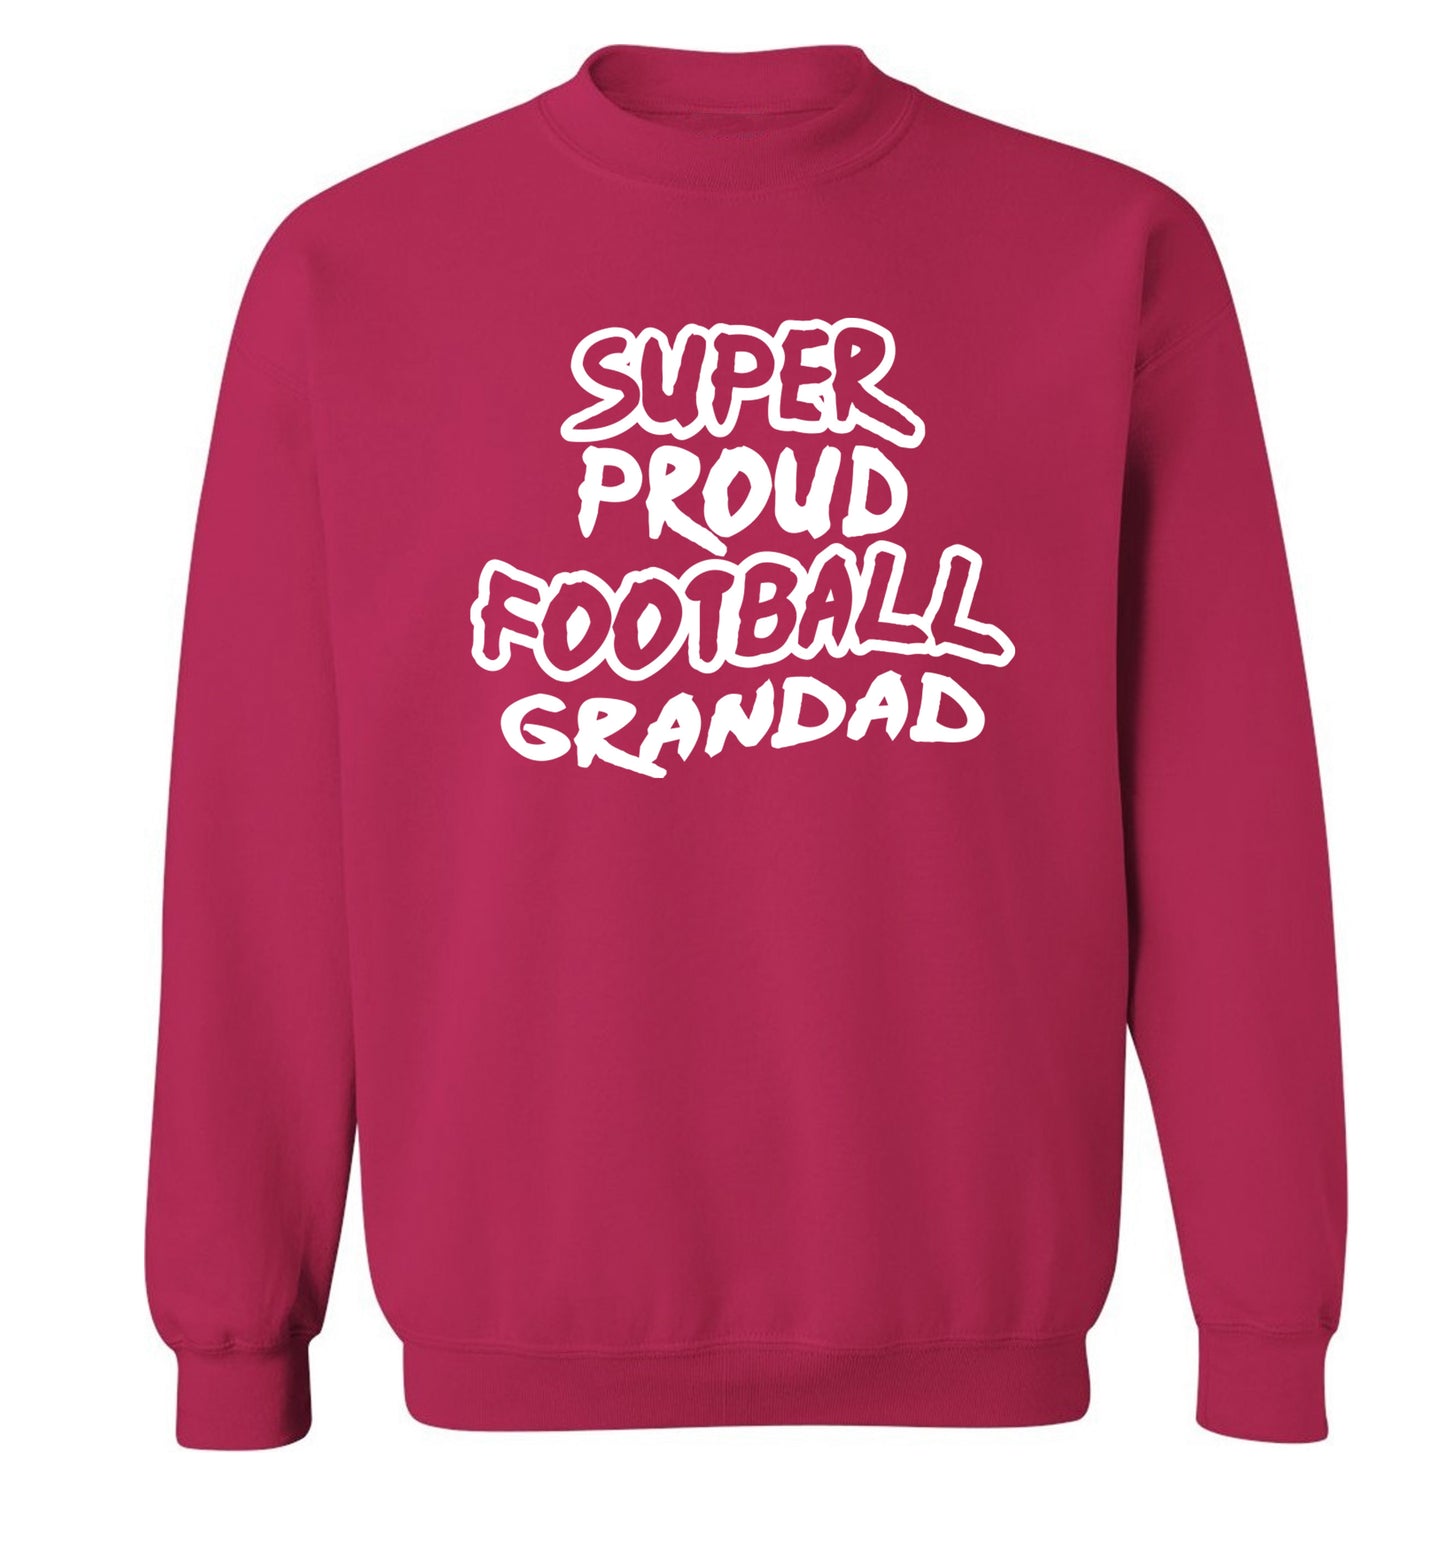 Super proud football grandad Adult's unisexpink Sweater 2XL